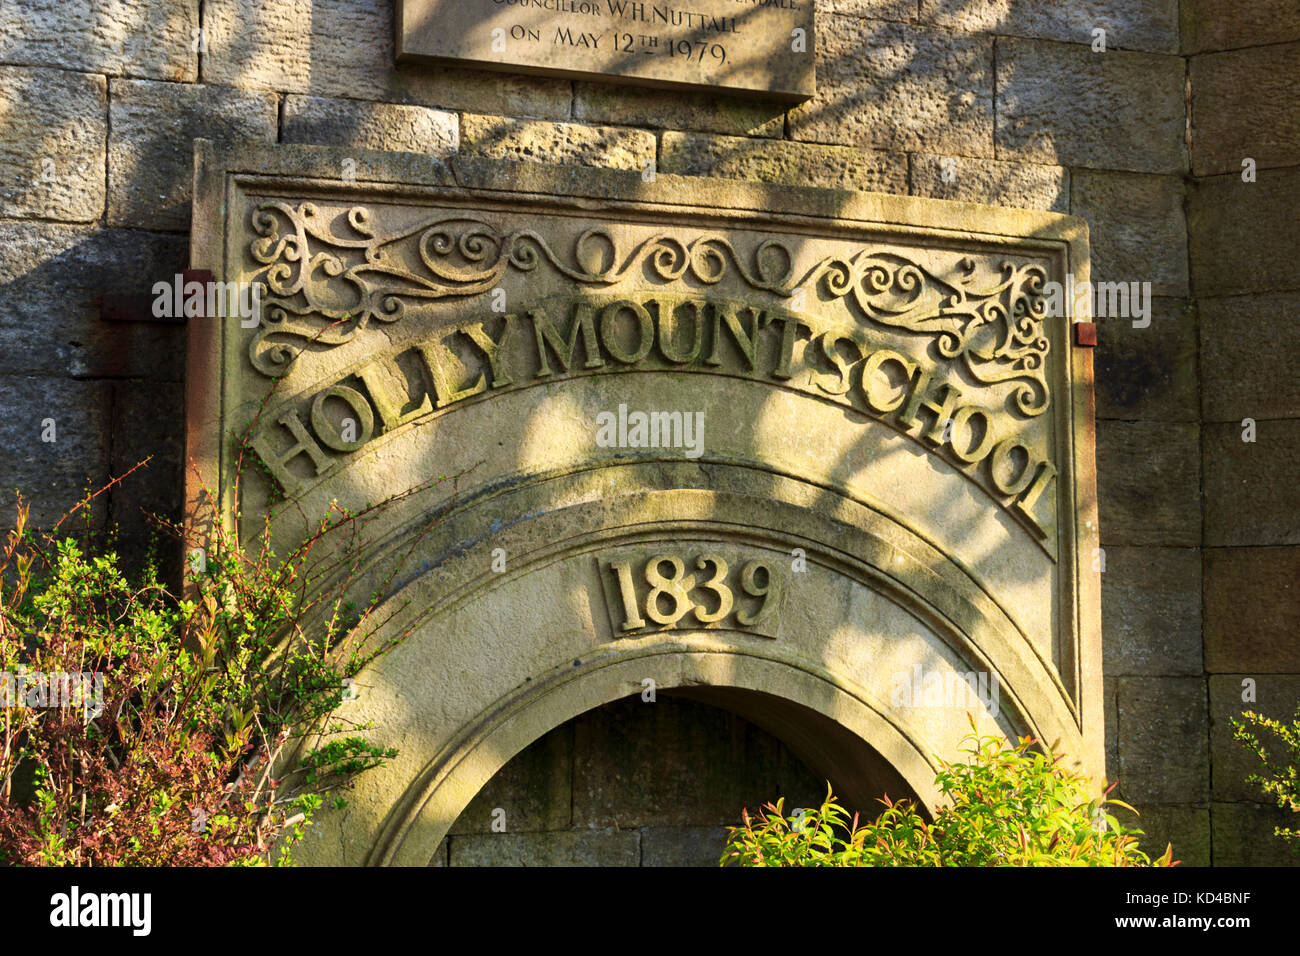 Holly Mount School, Rawtenstall. Stock Photo